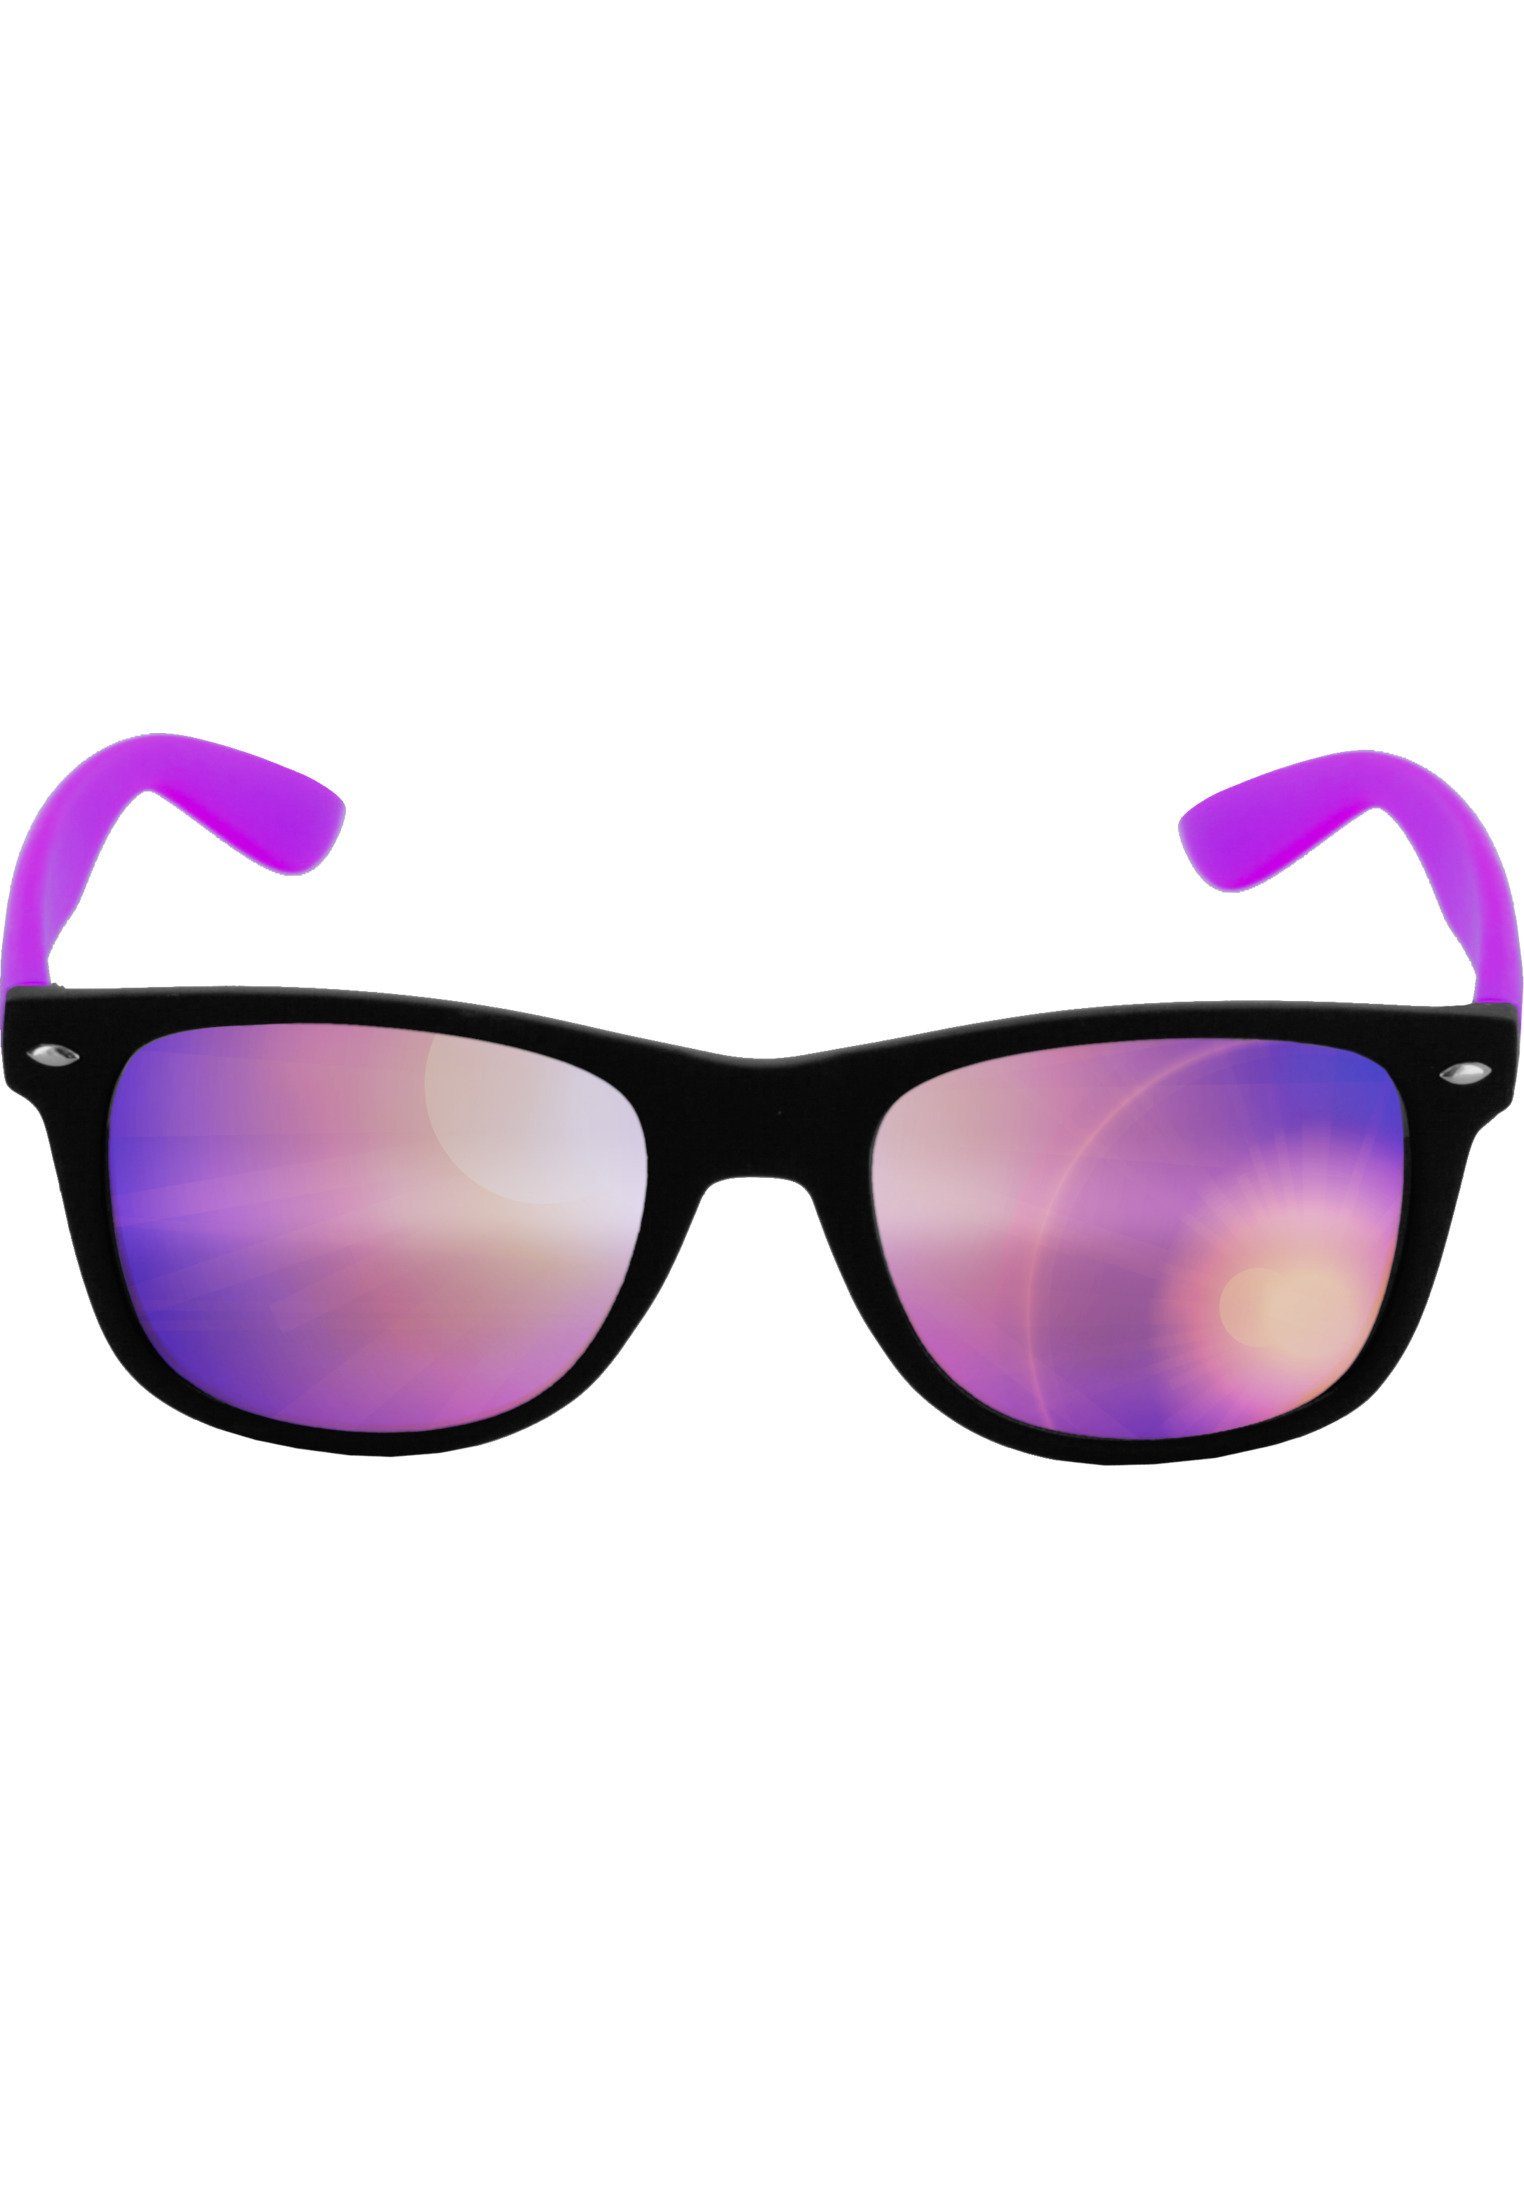 MSTRDS Sonnenbrille Accessoires Sunglasses Likoma Mirror blk/pur/pur